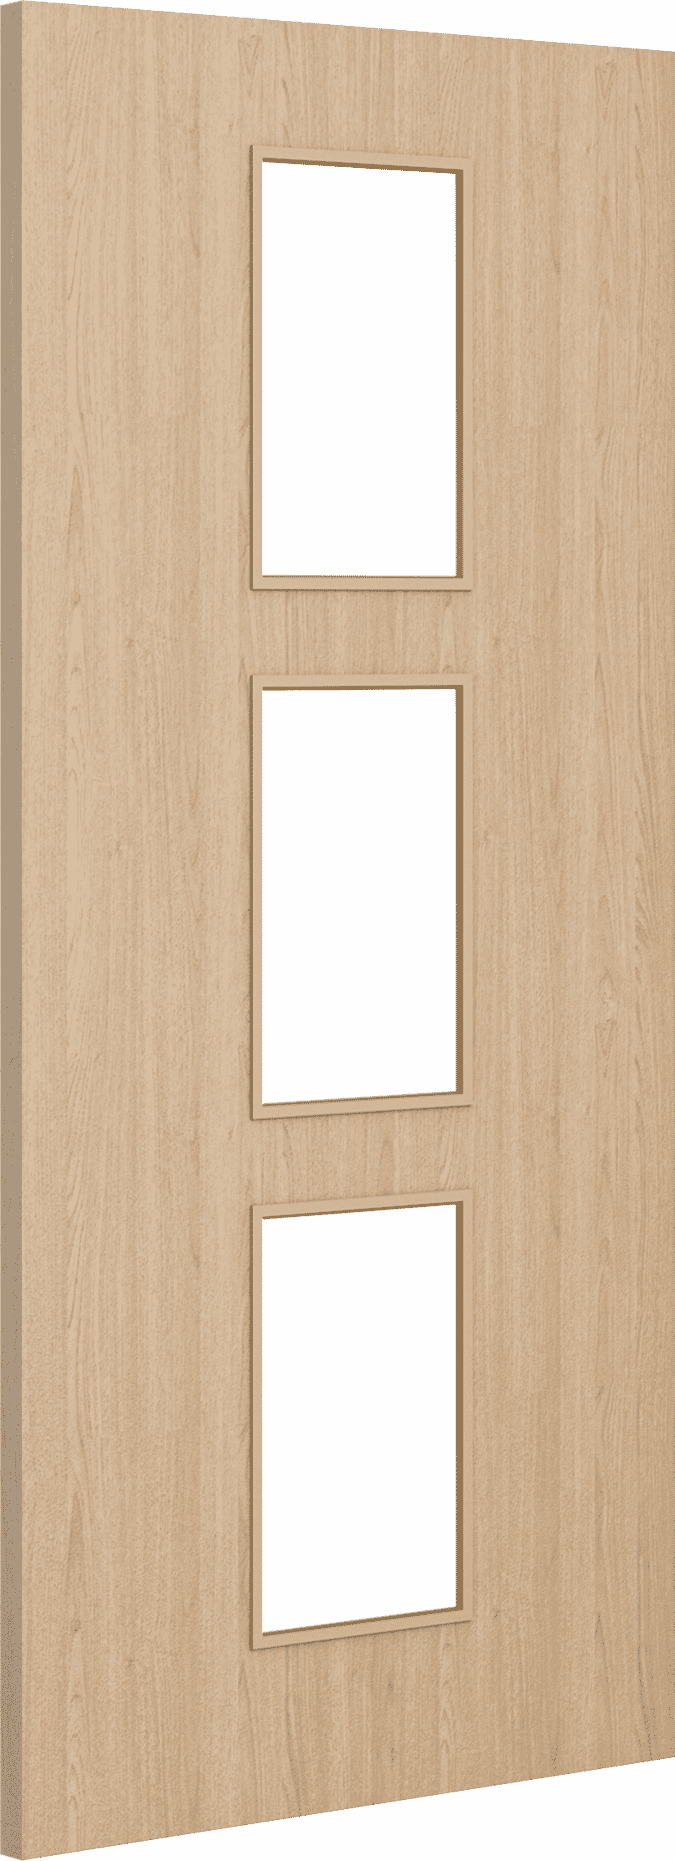 1981mm x 762mm x 44mm (30") Architectural Oak 11 Frosted Glazed - Prefinished FD30 Fire Door Blank